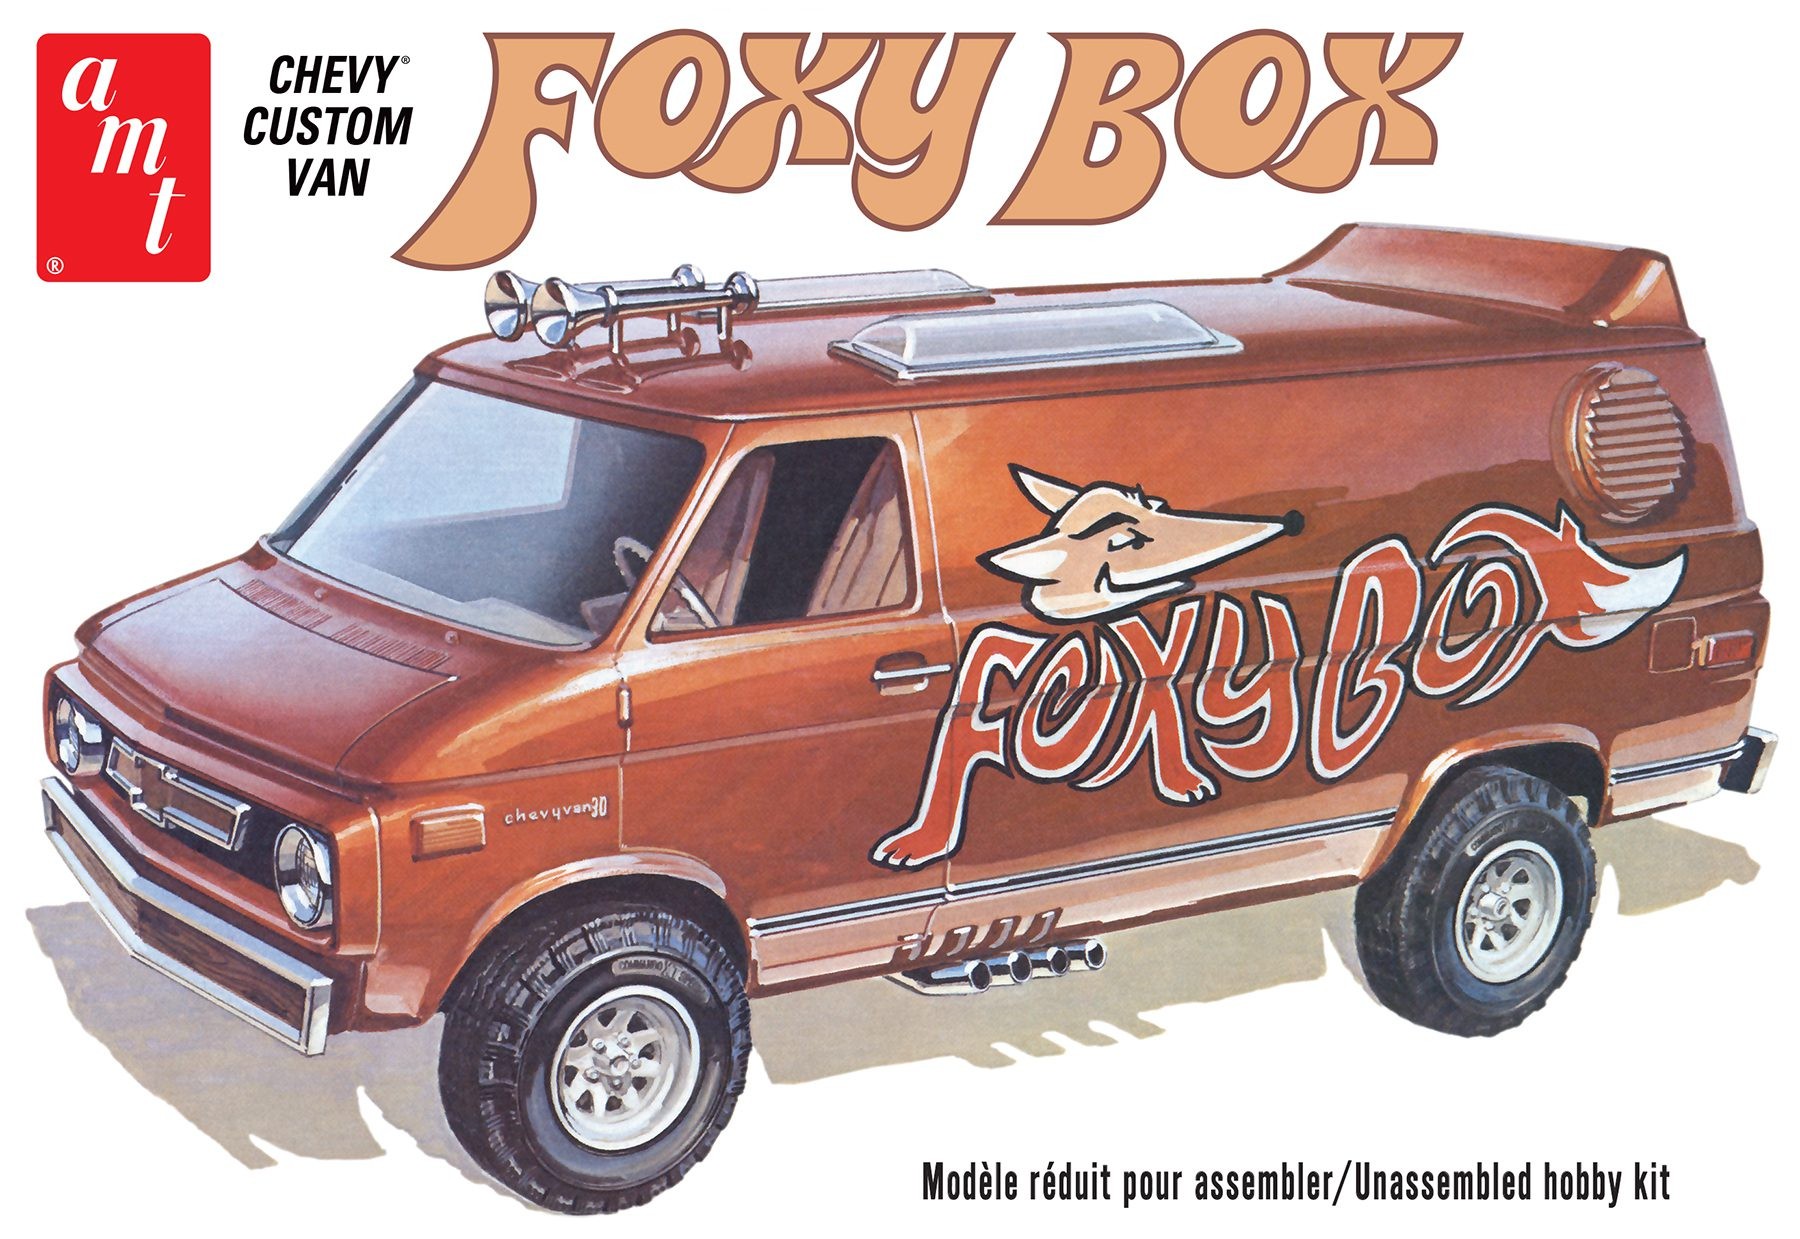 AMT 1265 CHEVY VAN 1975  "FOXY BOX" 1:25